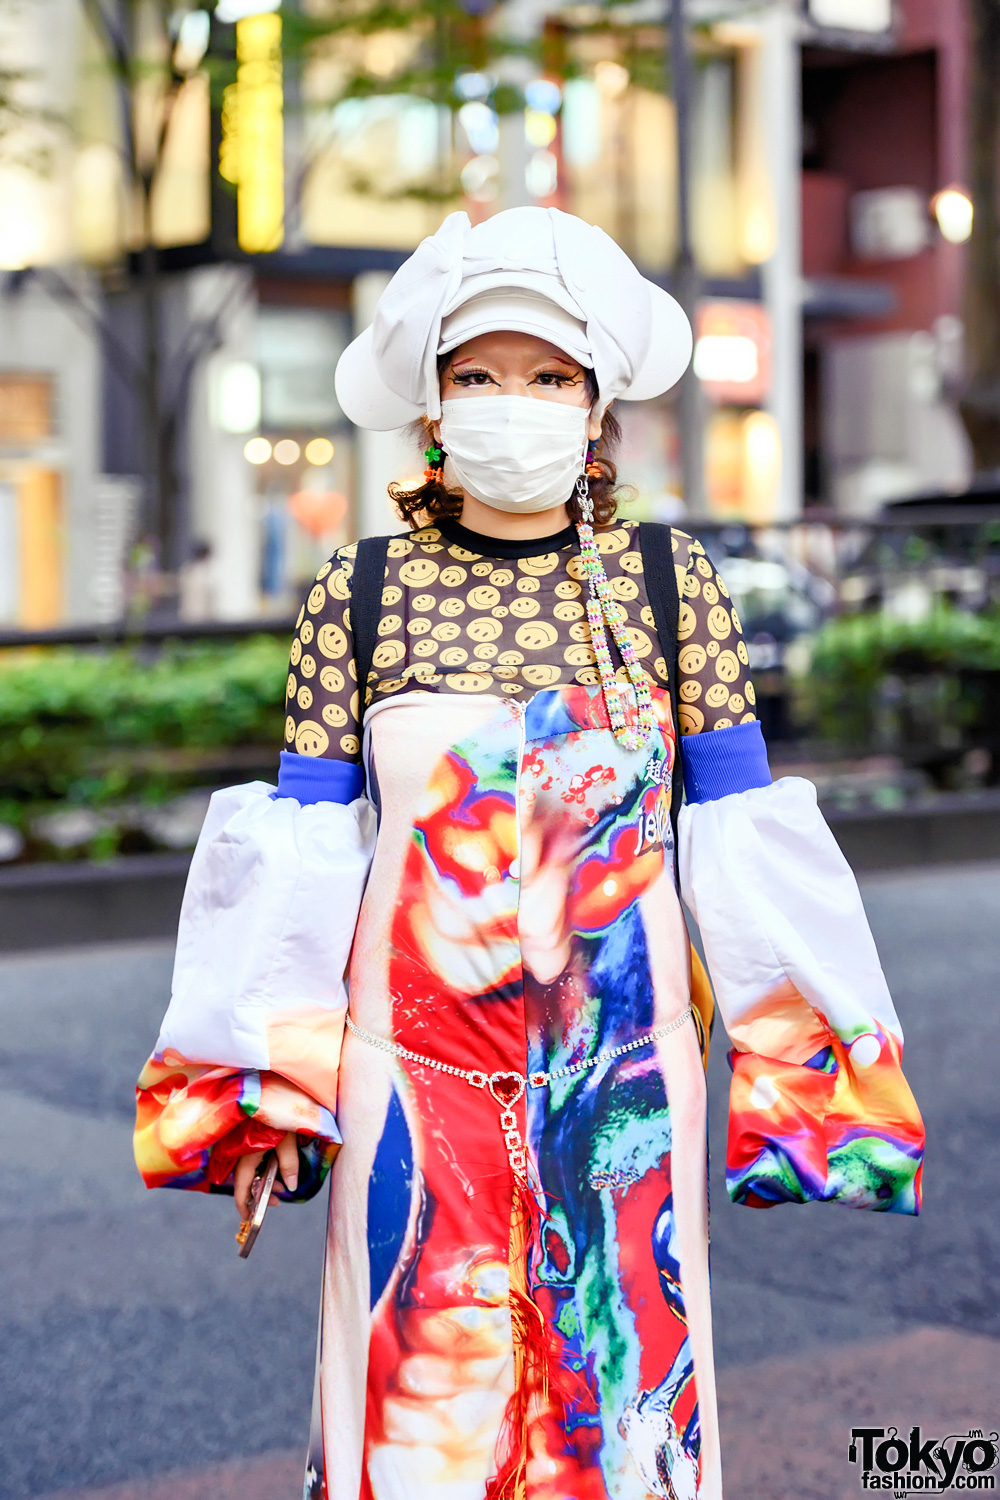 Japanese Fashion Designer in Colorful Avantgarde Handmade Street Style ...